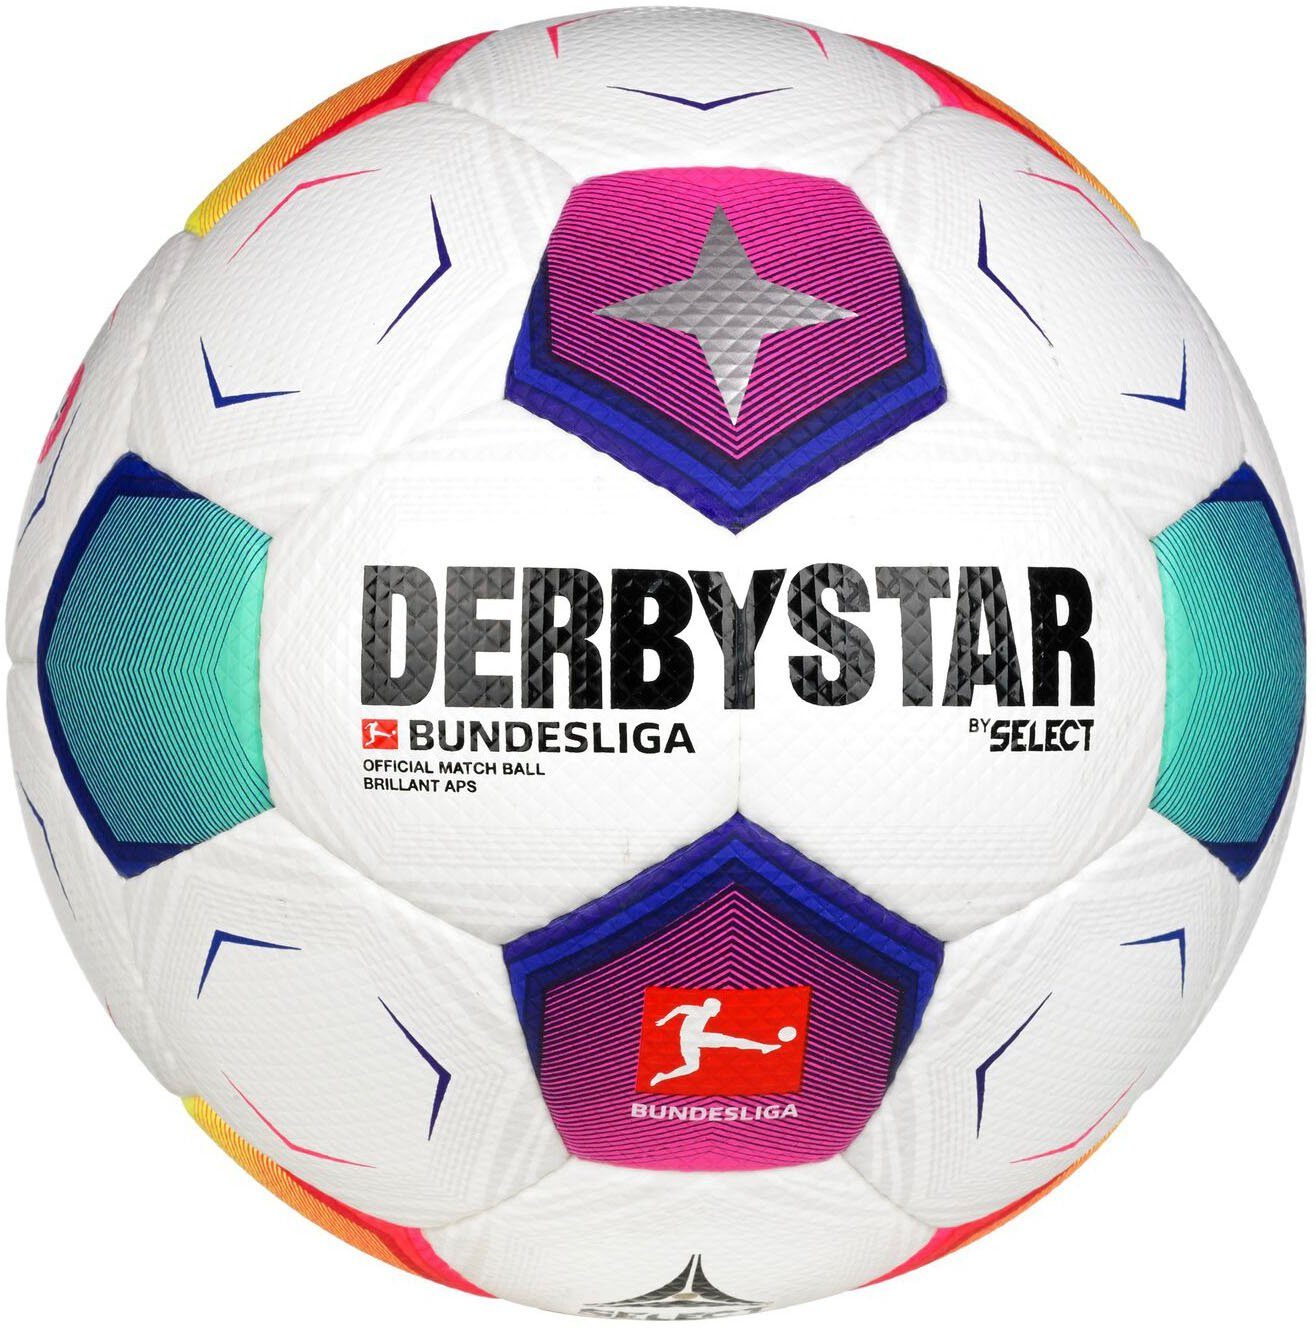 Derbystar Fußball Bundesliga Brillant APS | Fußbälle